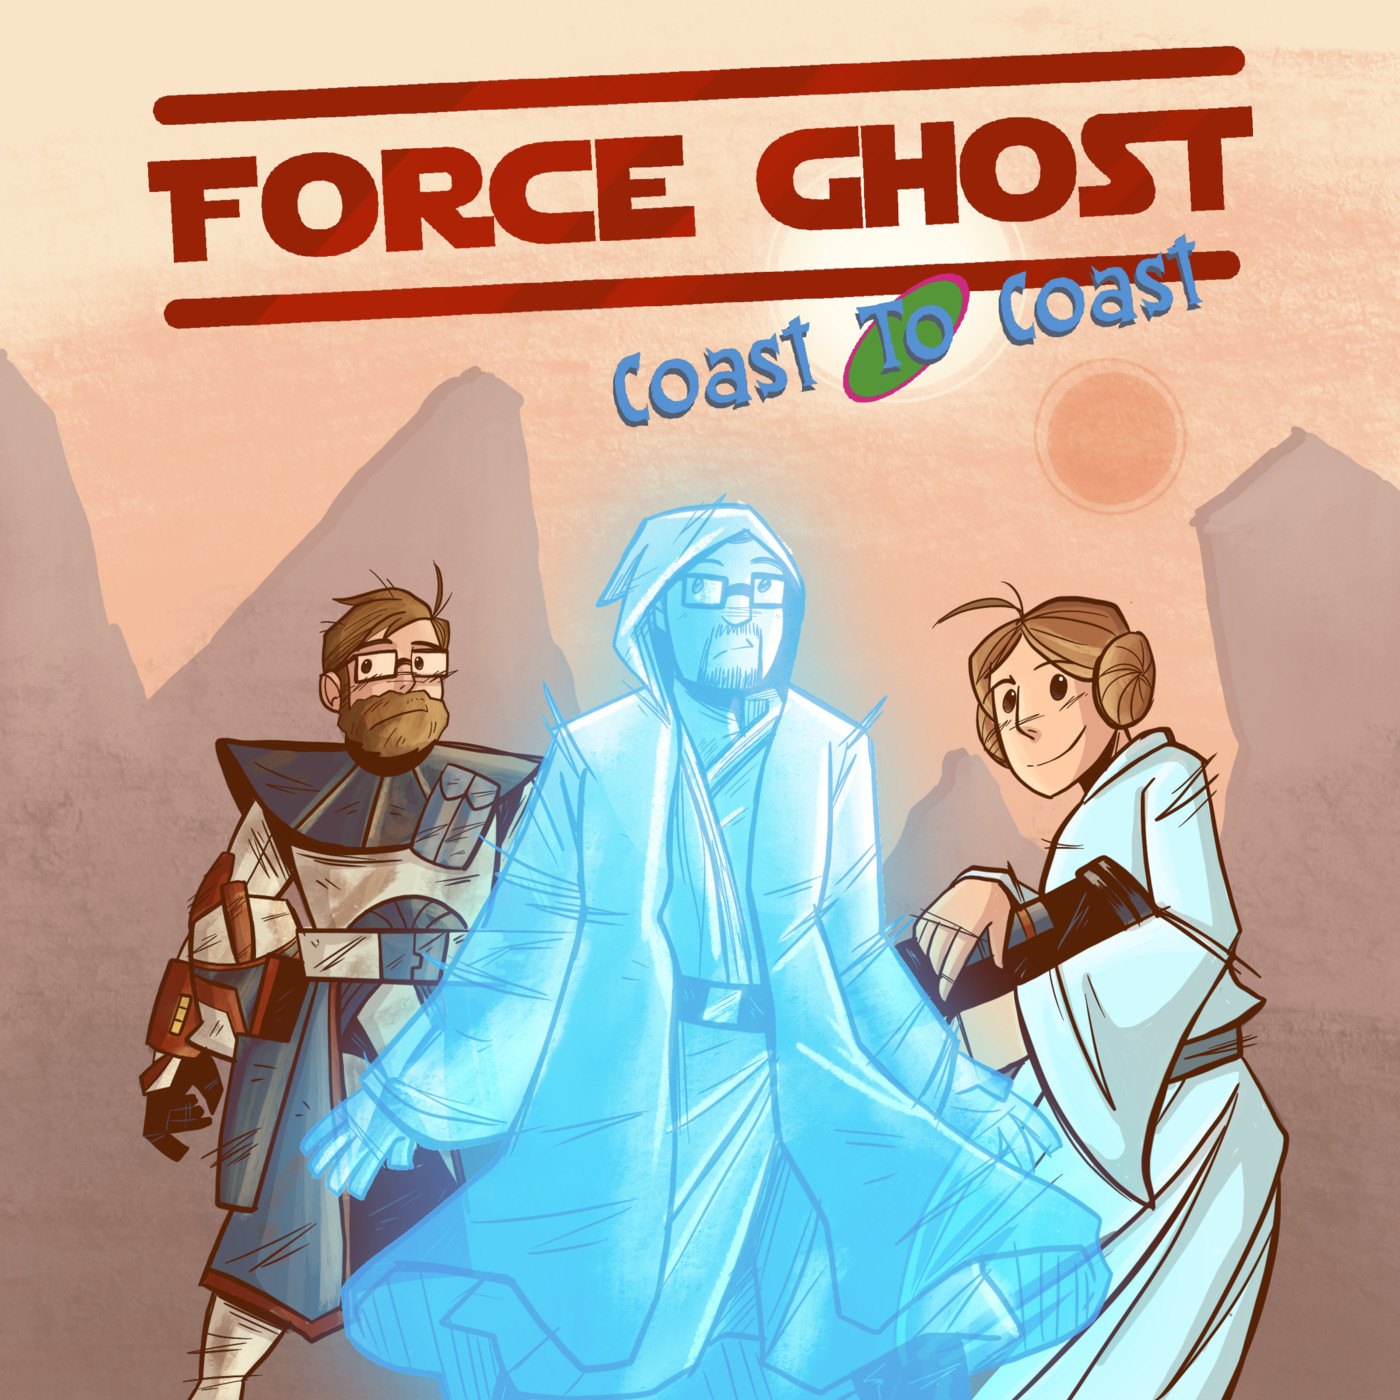 Force Ghost Coast to Coast